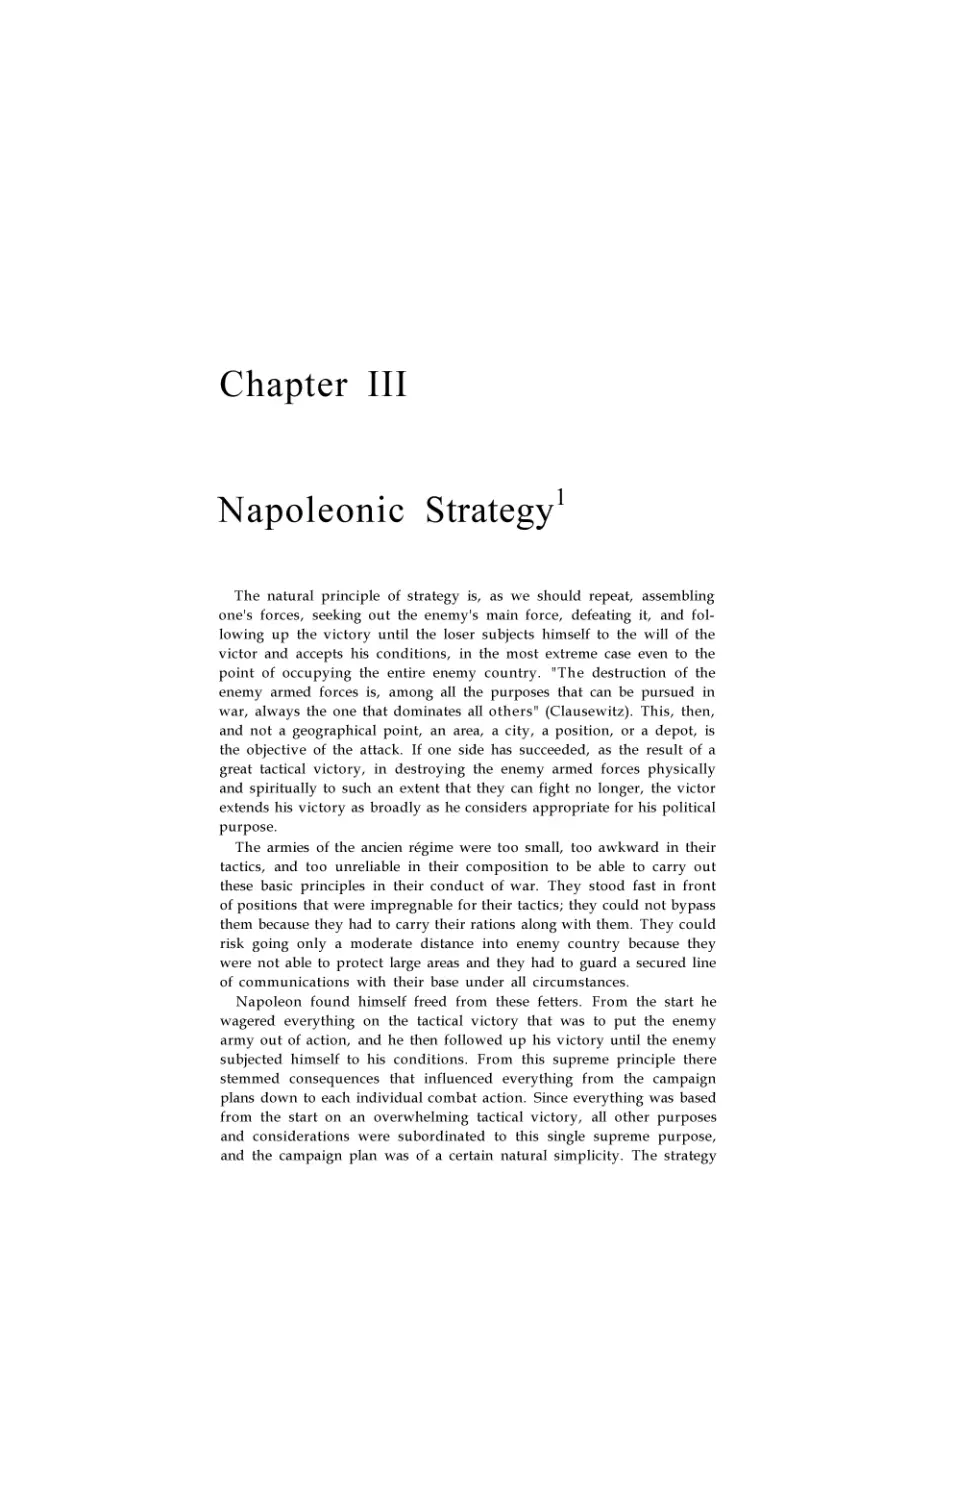 Napoleonic Strategy